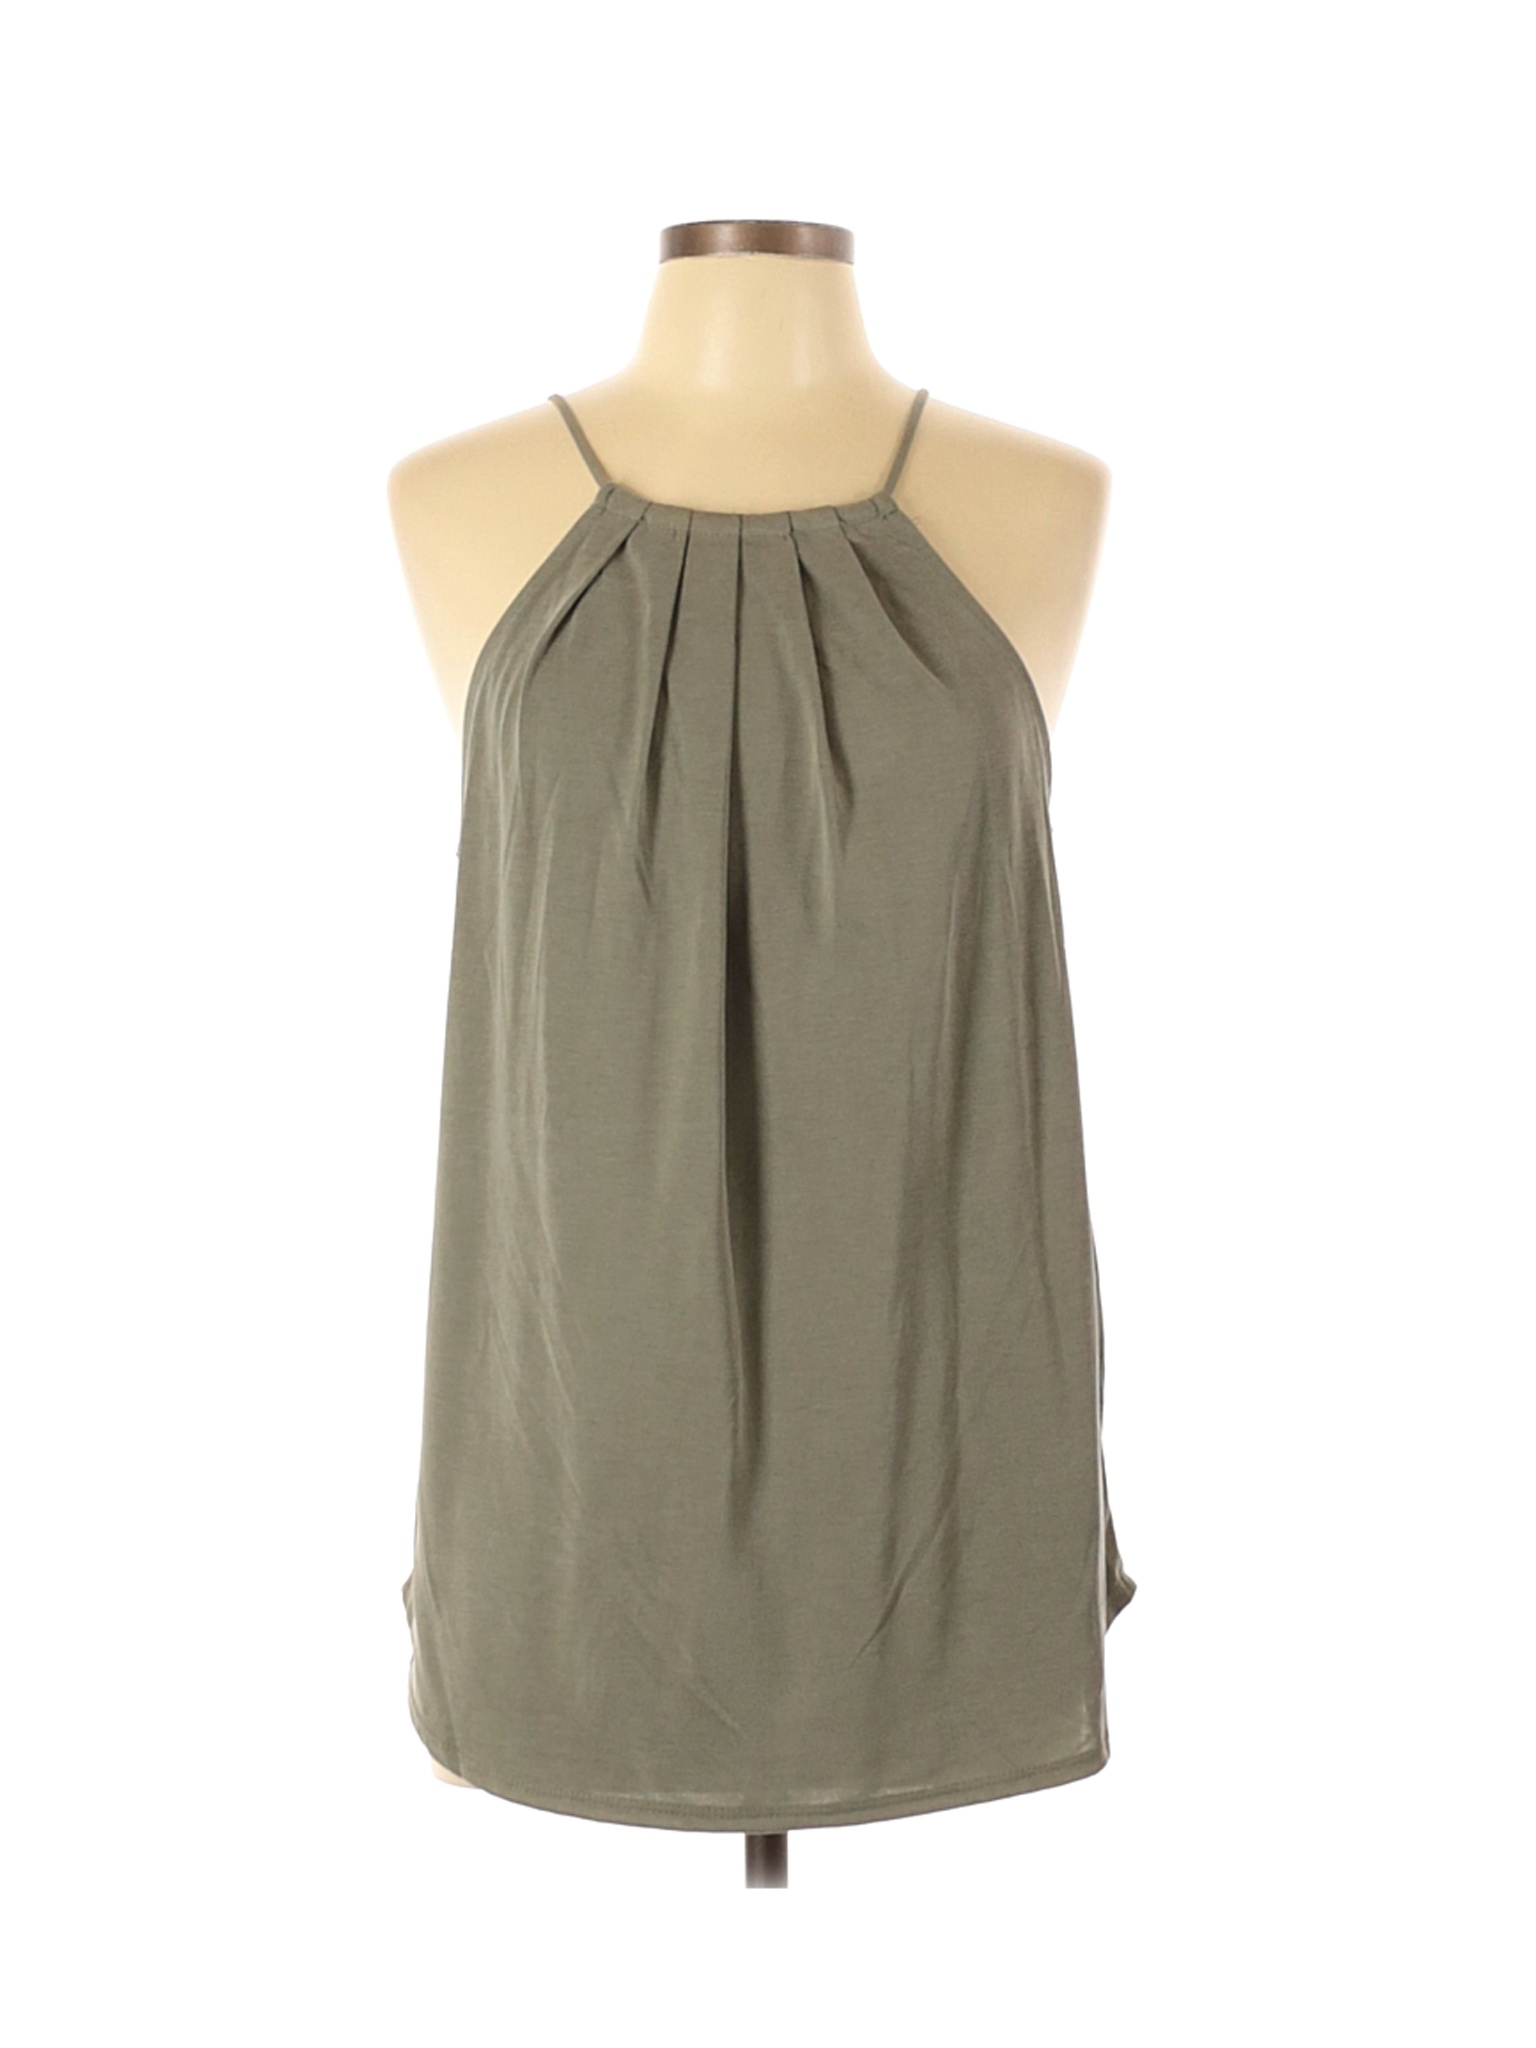 NWT Green Envelope Women Green Sleeveless Top L | eBay